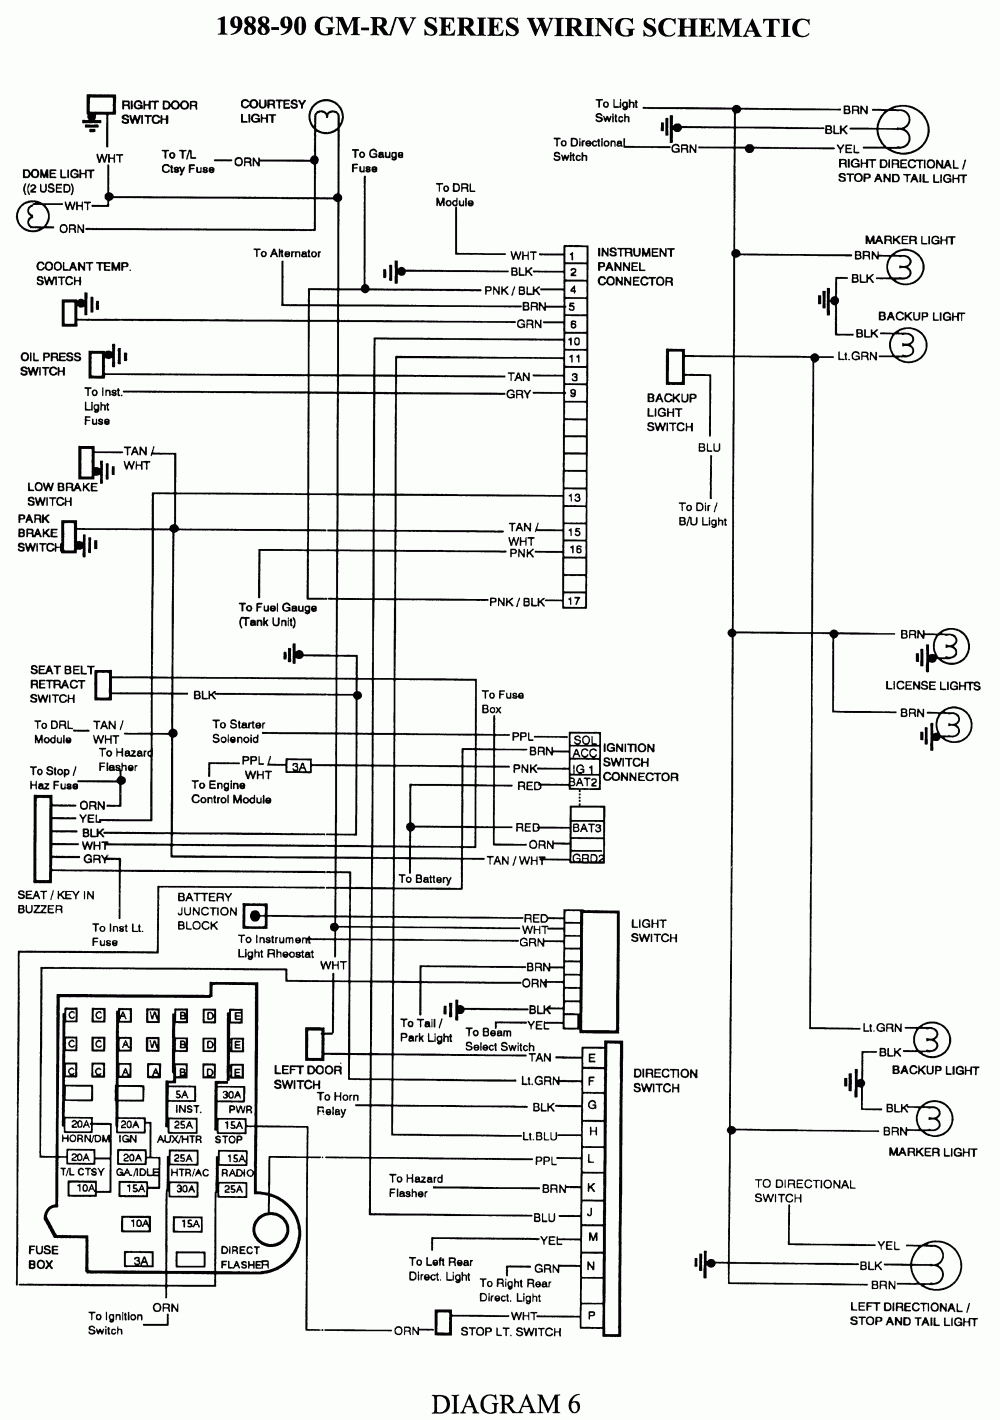 Repair Guides | Wiring Diagrams | Wiring Diagrams | Autozone - 1988 Chevy Truck Wiring Diagram